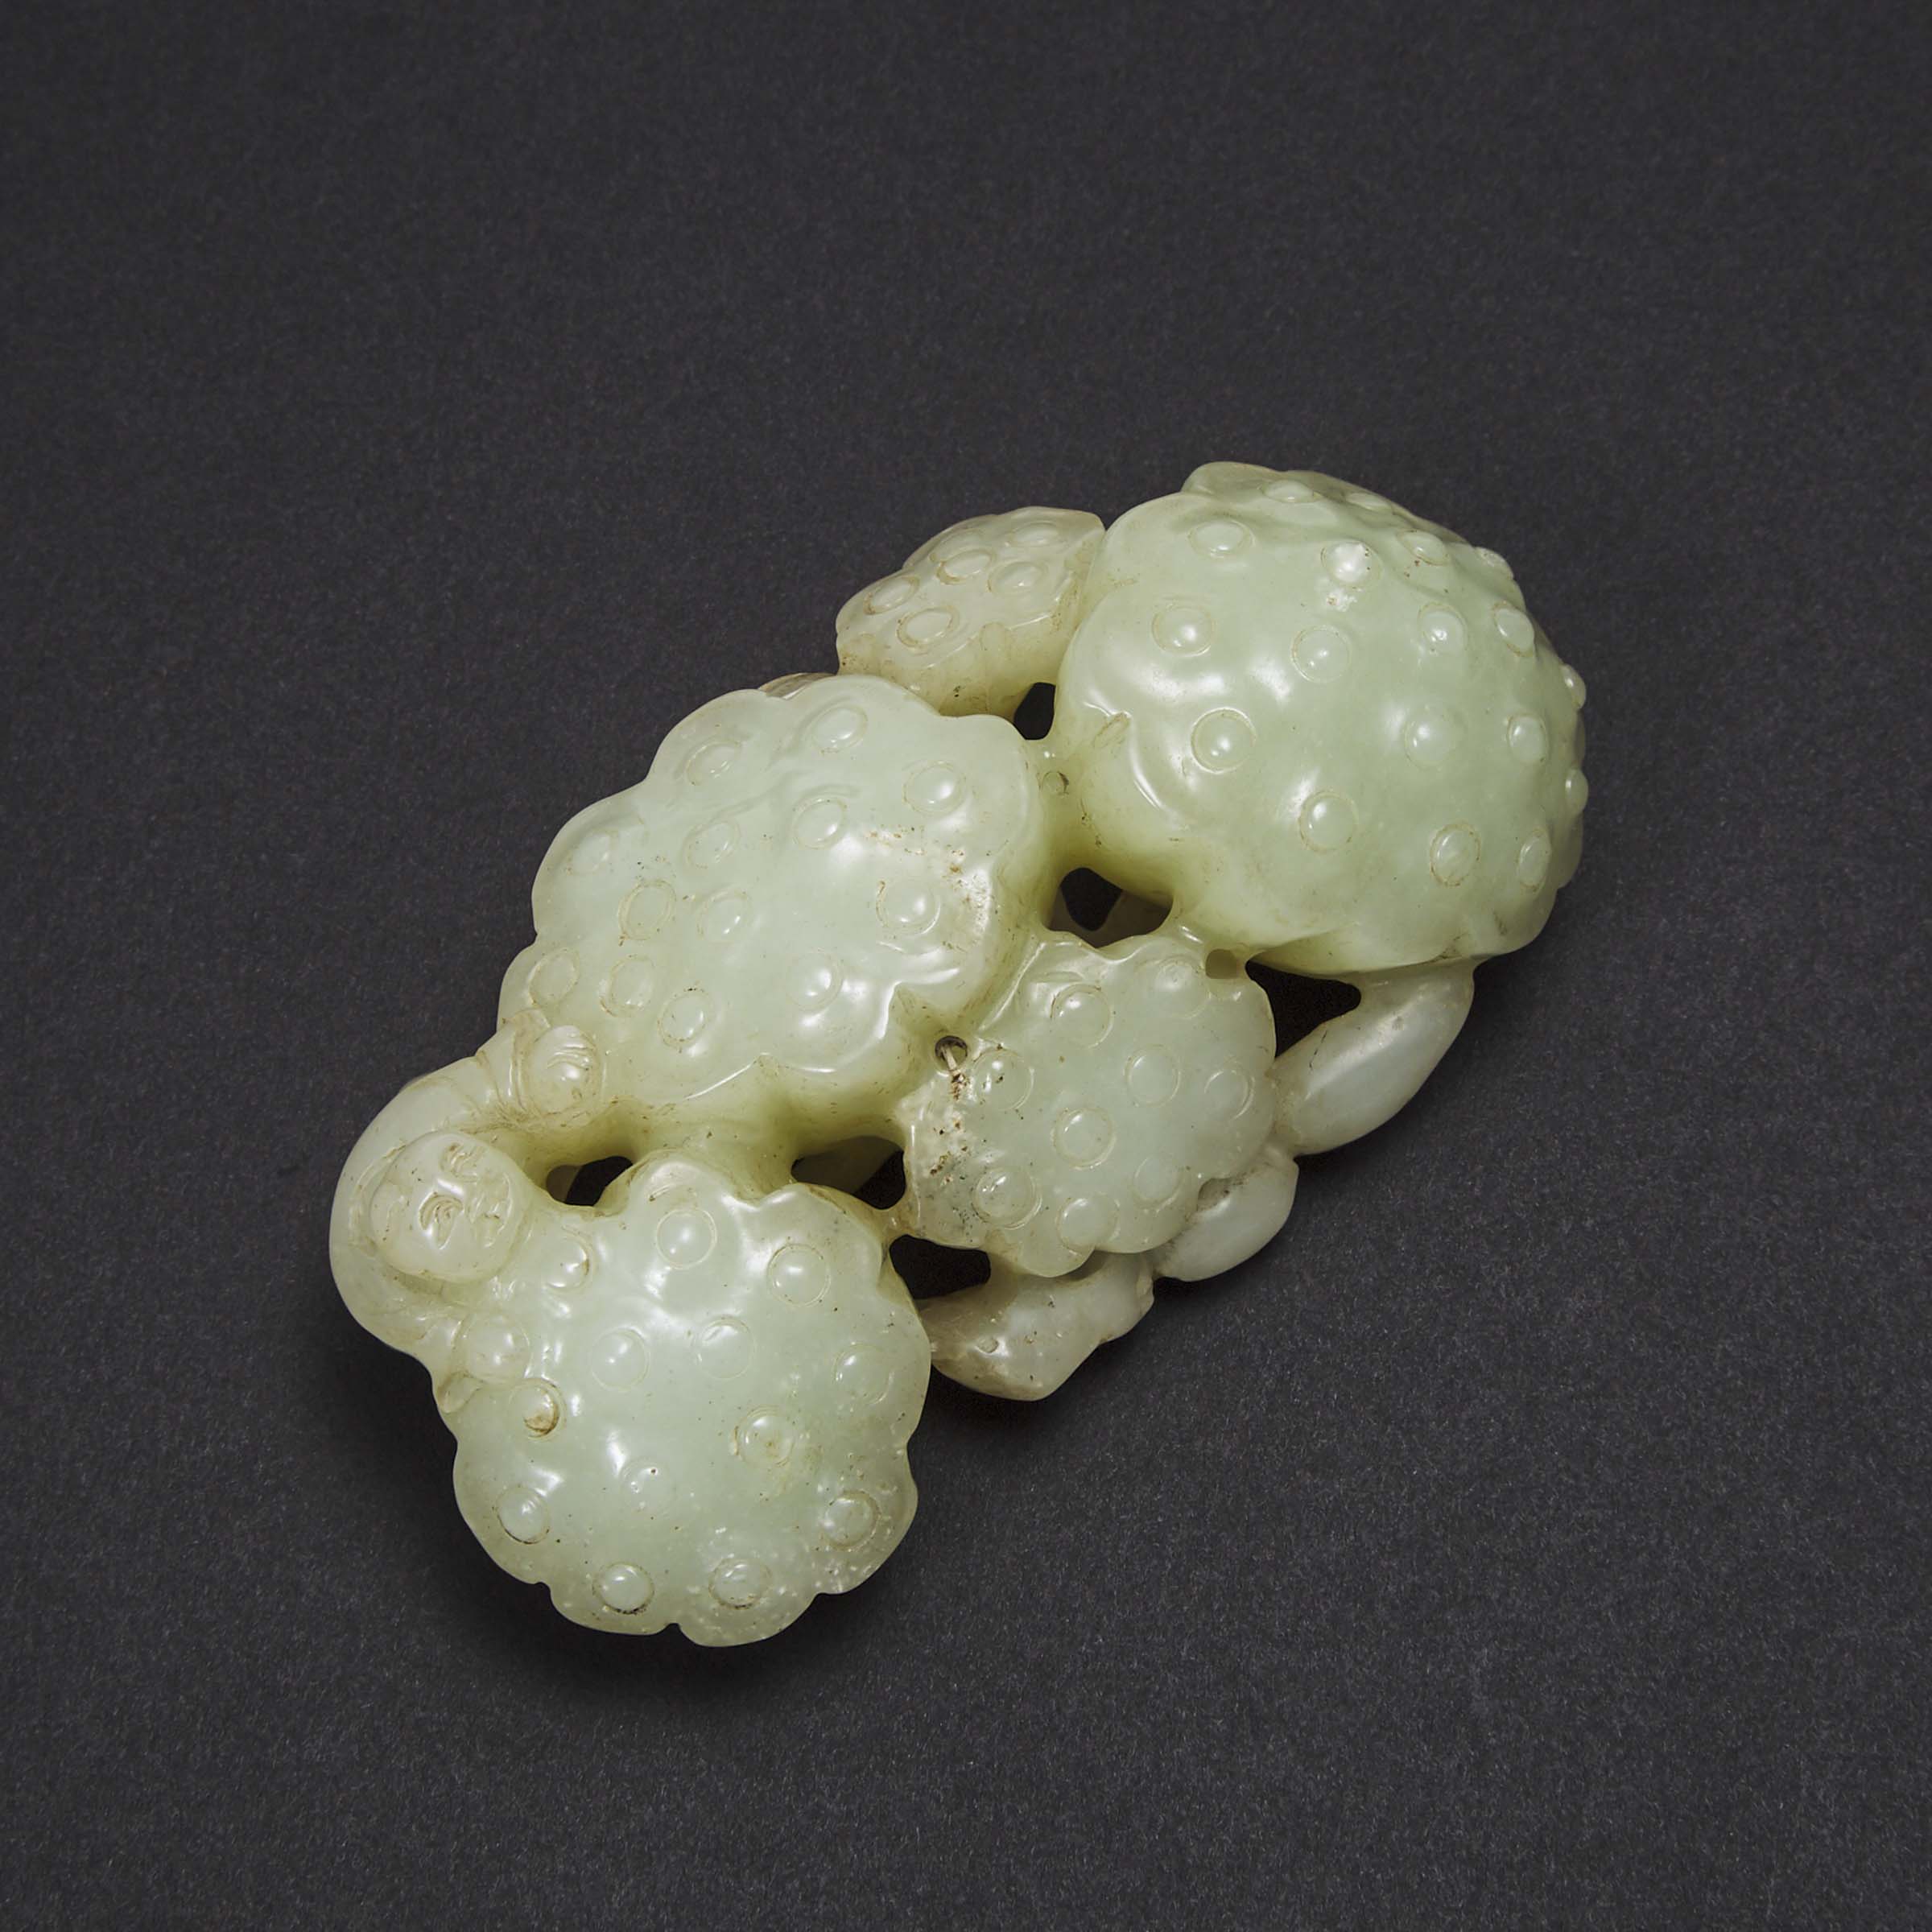 A Pale Celadon Jade 'Lotus' Group Carving